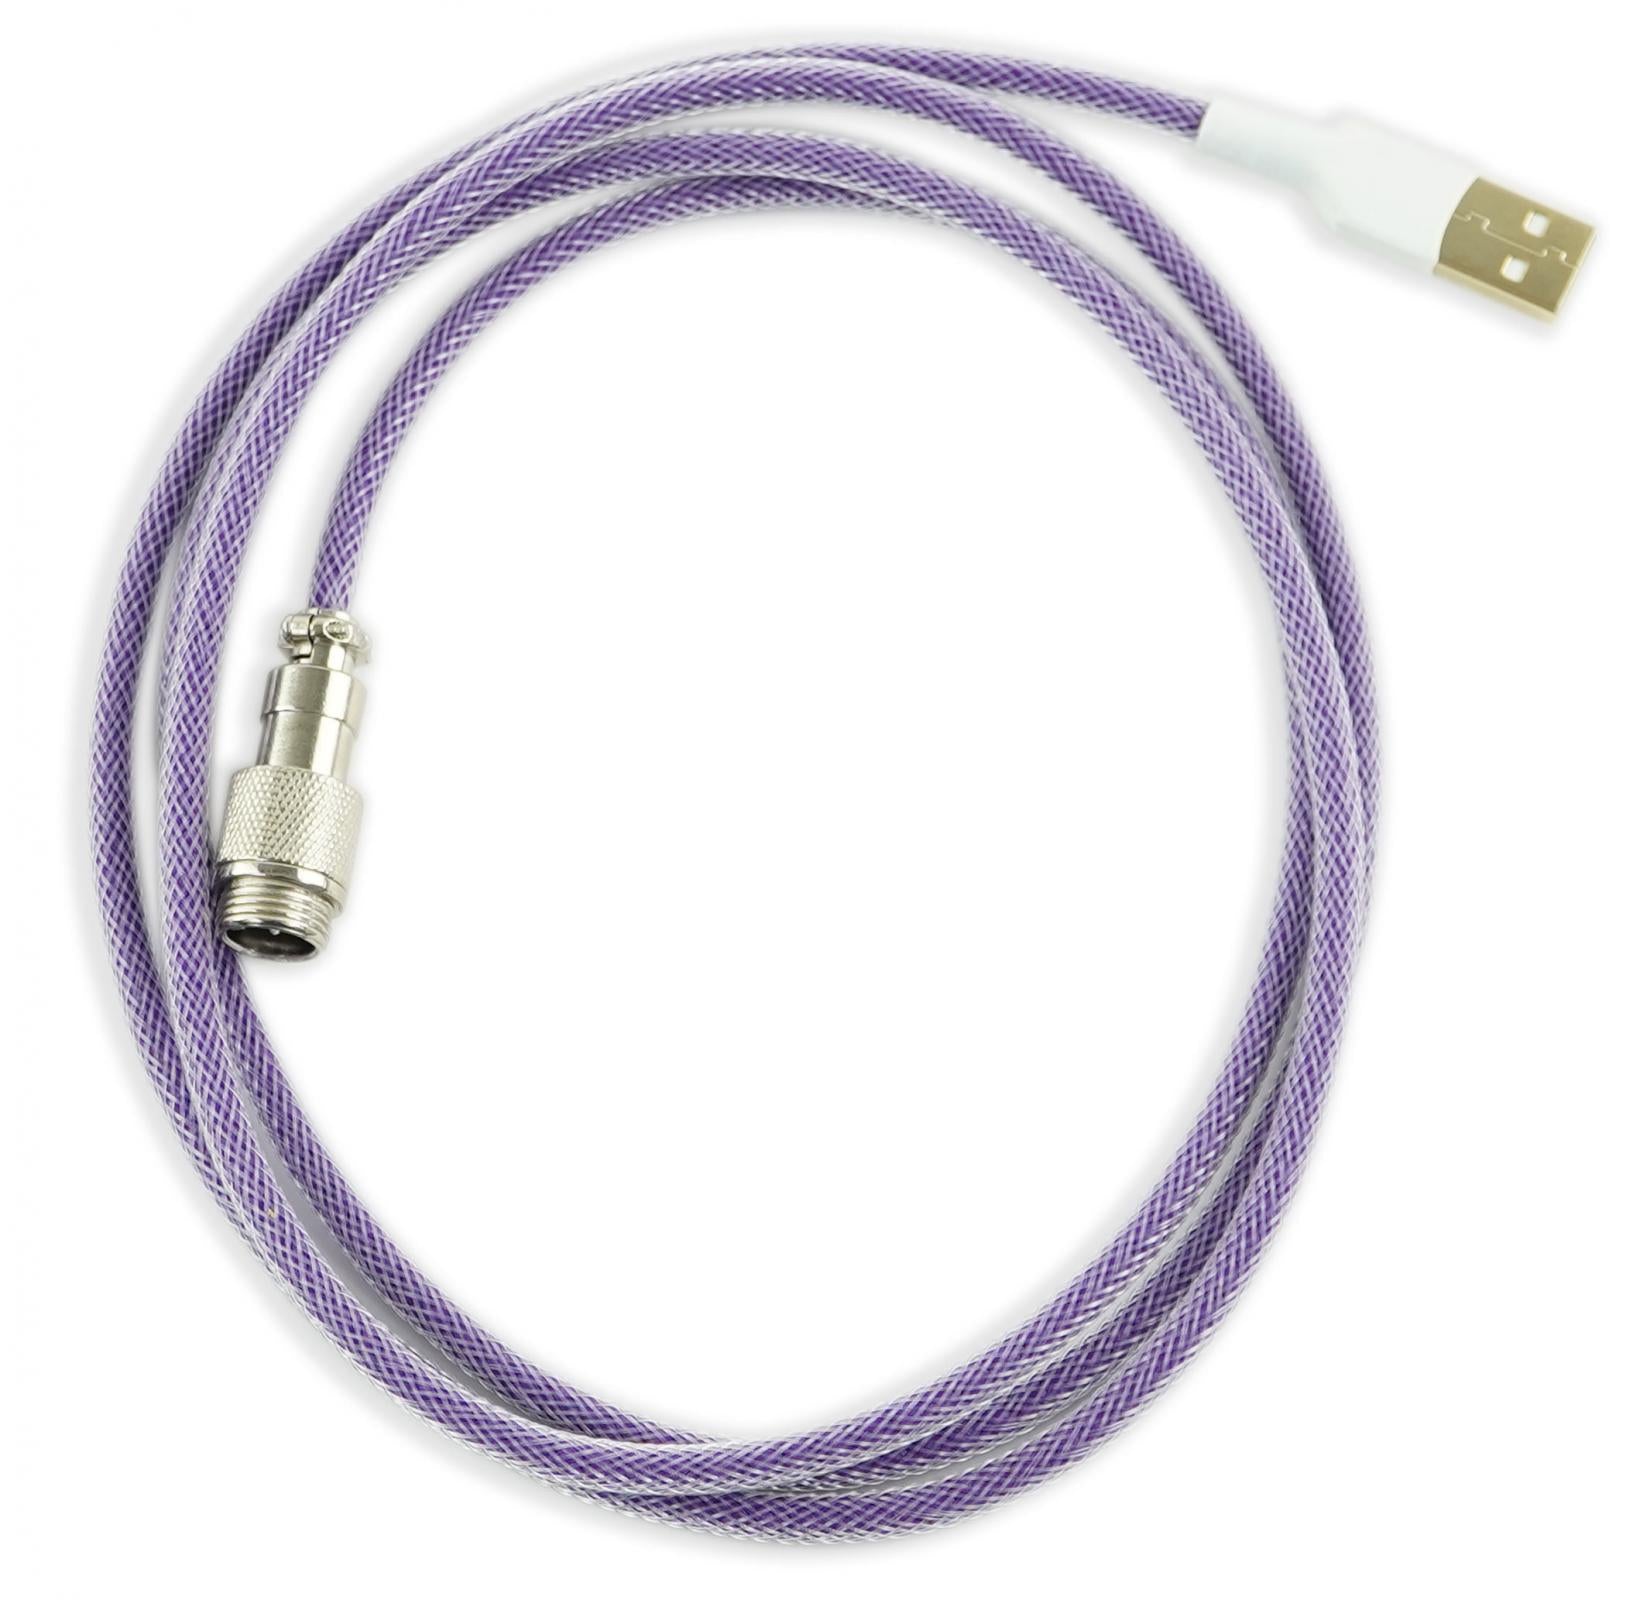 Kraken Purple Sleeved Aviator Universal USB Keyboard Cable MKHE88TD38 |0|